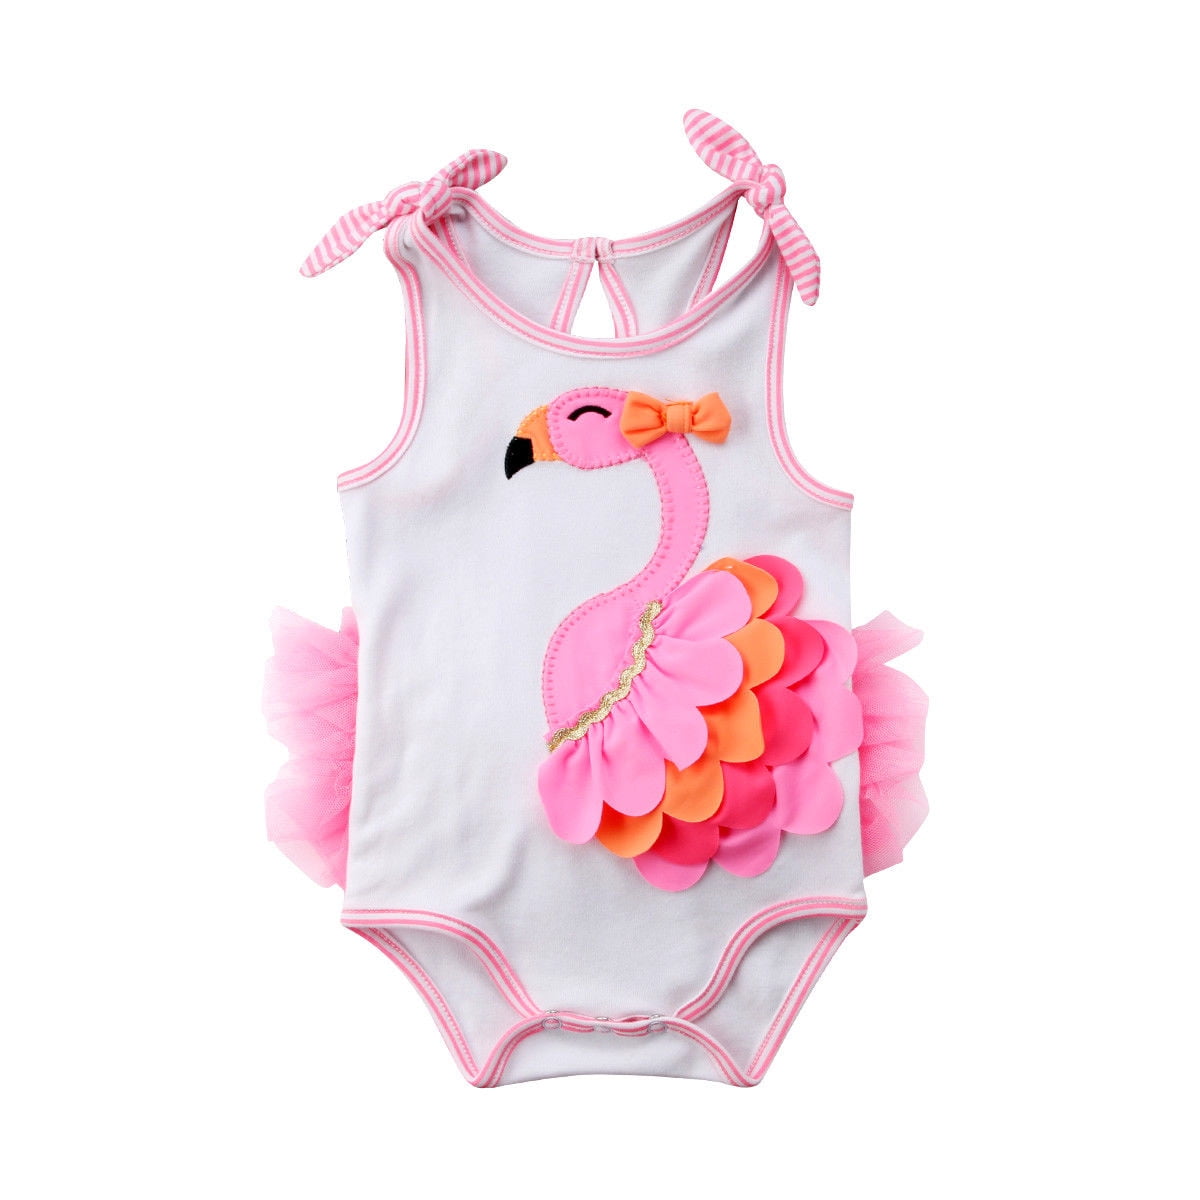 Baby Girl One Piece Swimsuit Swimwear Toddler Kid Flamingo Bikini Bathing Suit Sunsuit Rash Guard 1-5t 